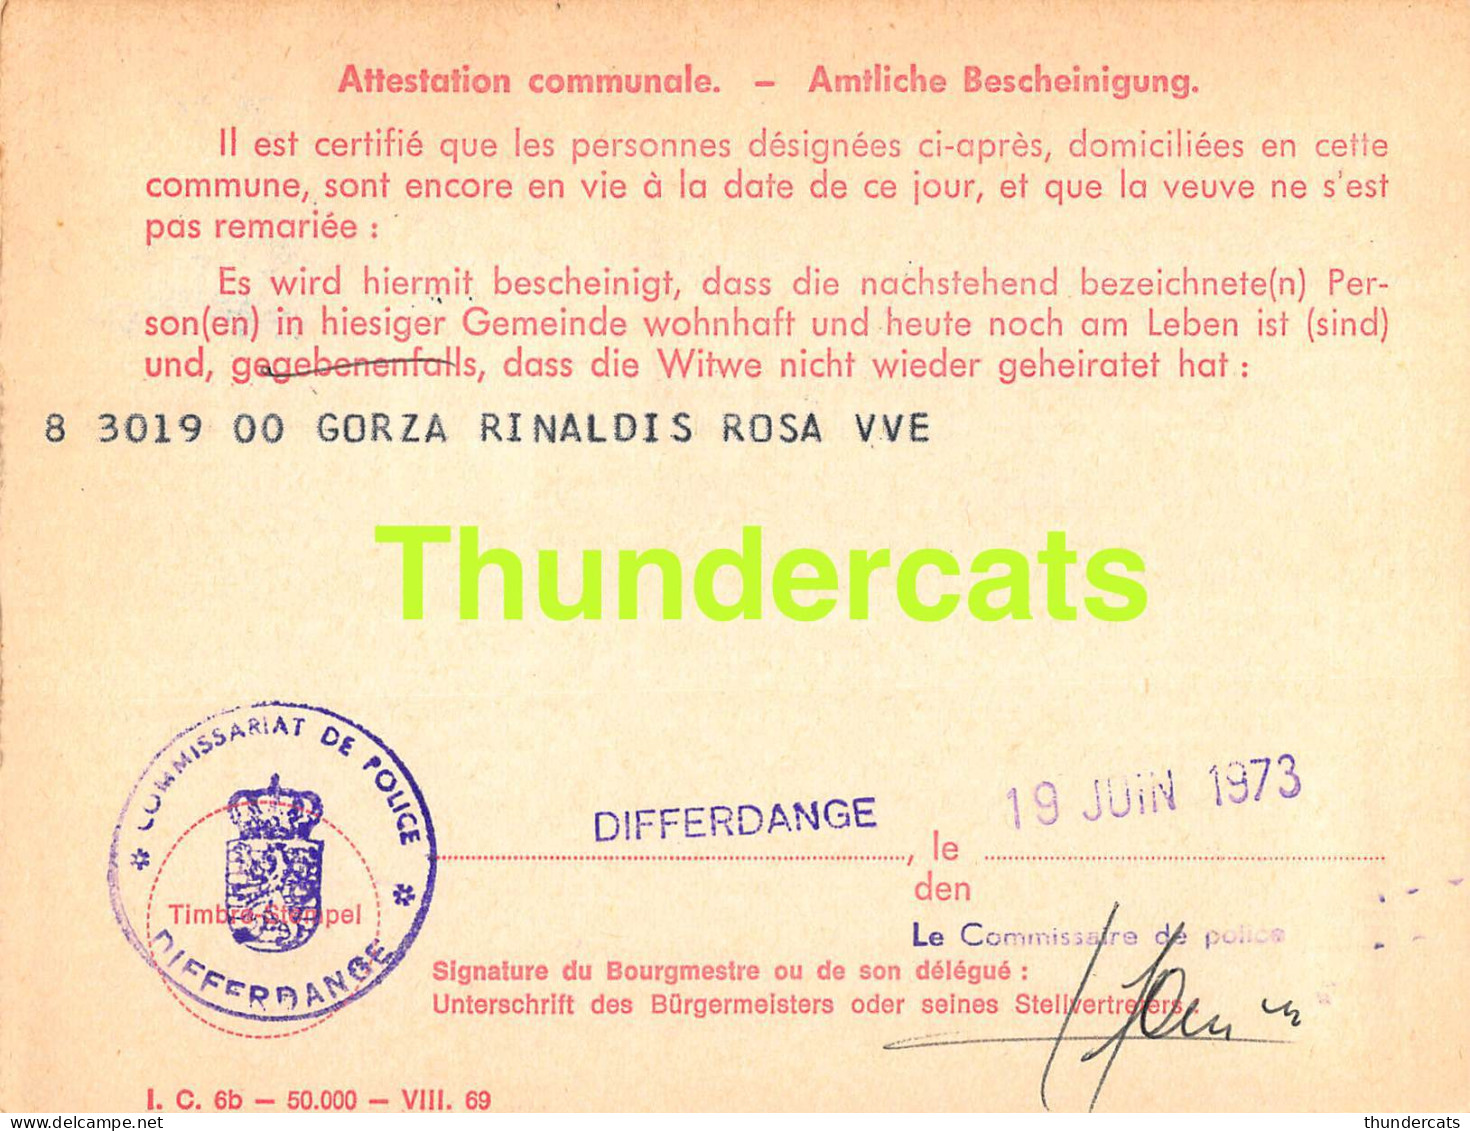 ASSURANCE VIEILLESSE INVALIDITE LUXEMBOURG 1973 GORZA RINALDIS DIFFERDANGE  - Cartas & Documentos